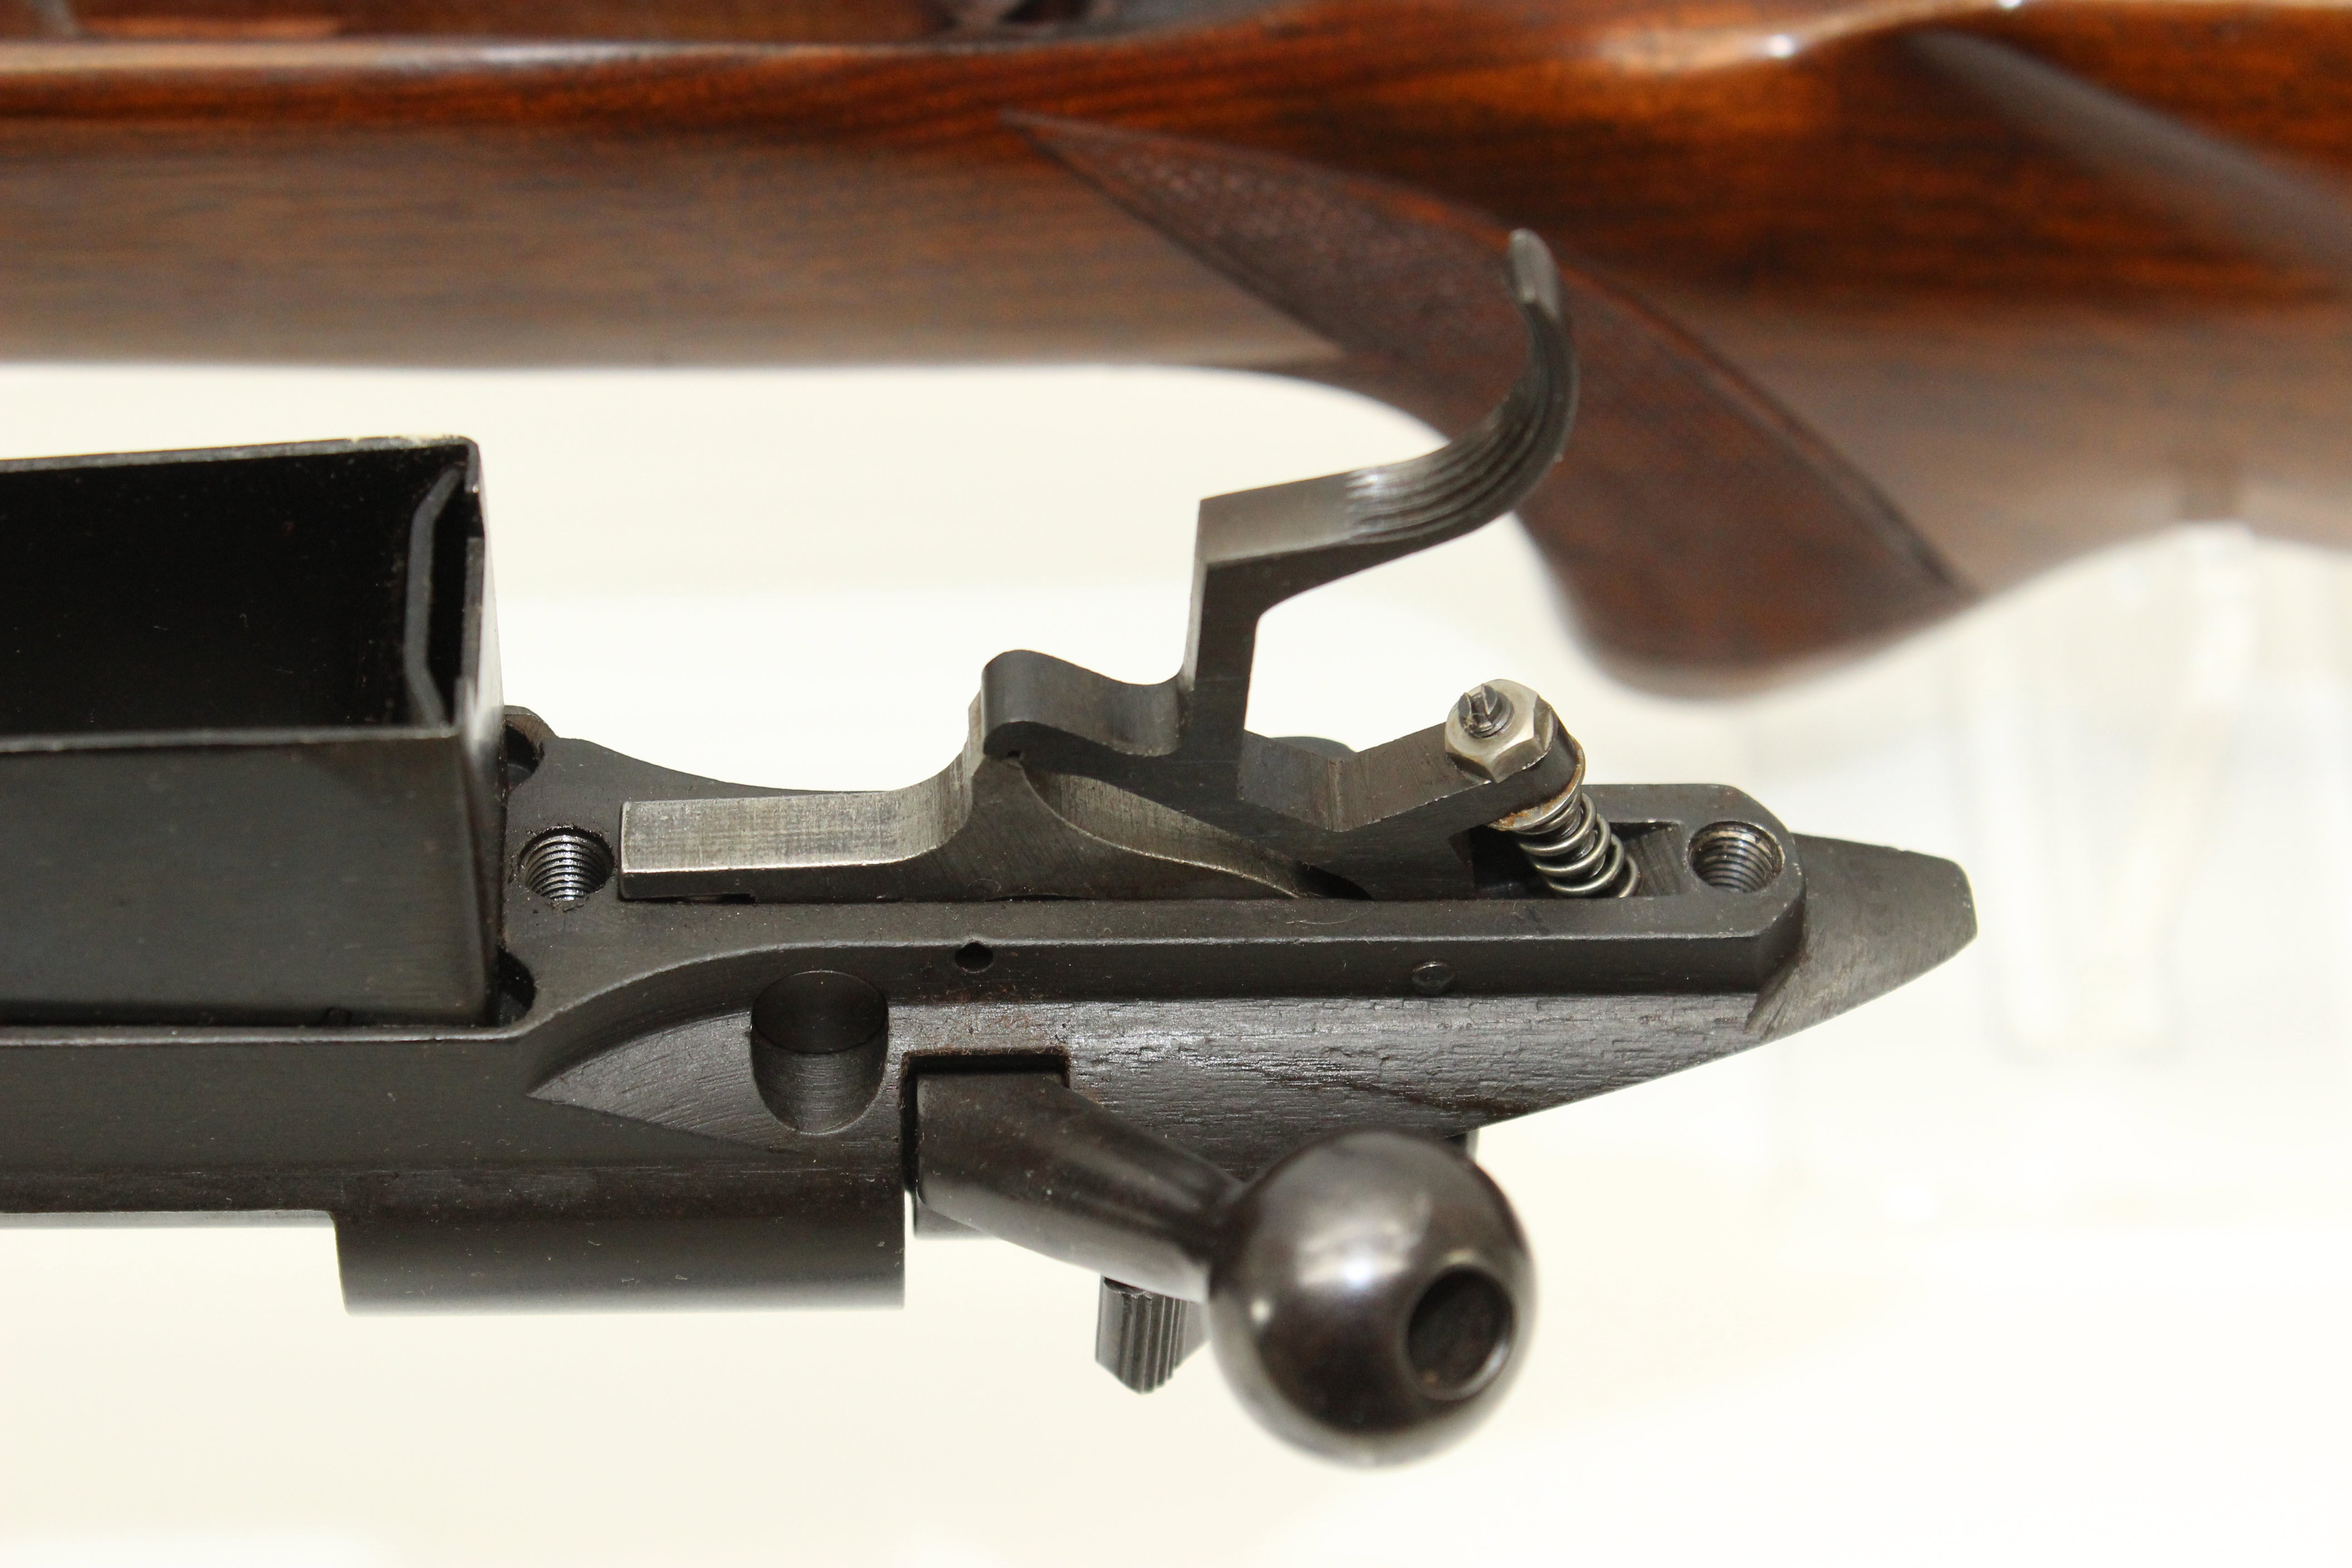 .220 Swift Standard Rifle - 1958